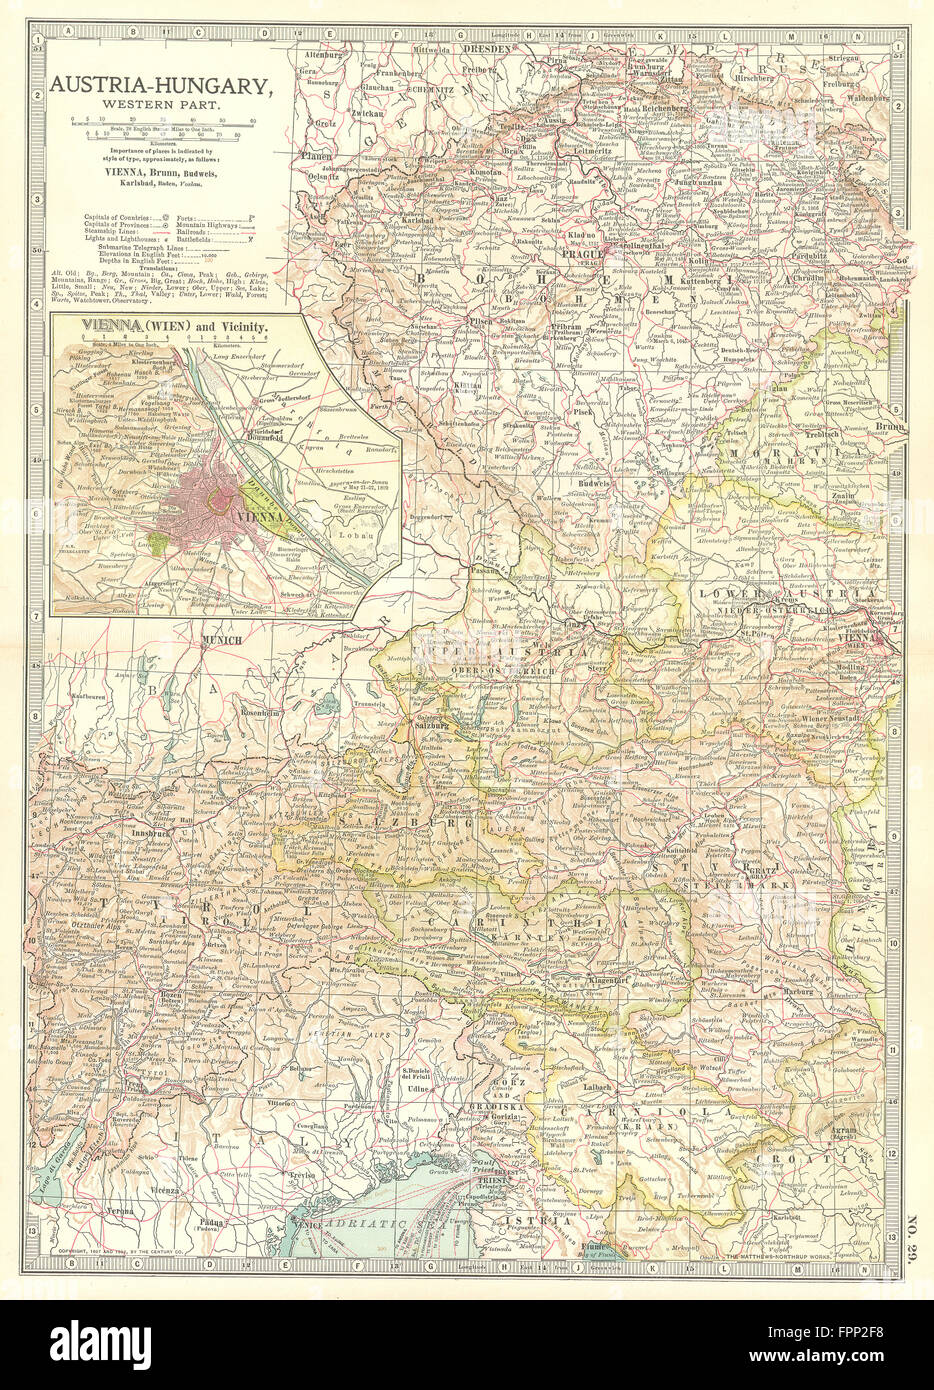 AUSTRIA-HUNGARY WEST Bohemia Tyrol Styria Carinthia; Vienna Wien 1903 old map 